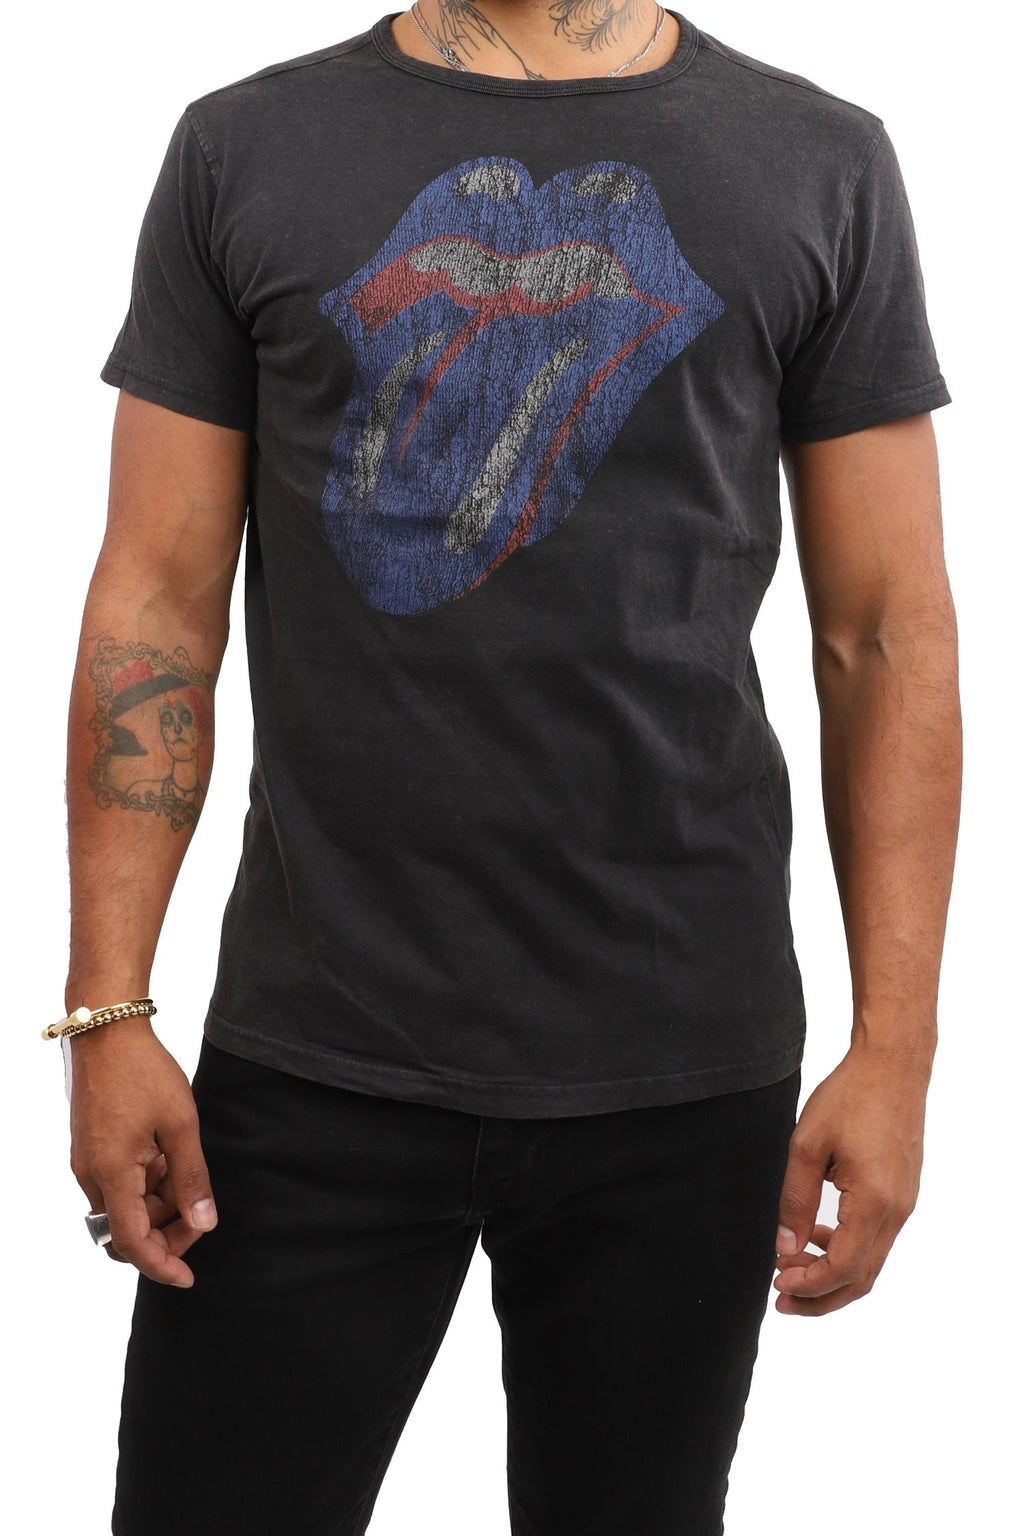 Rolling Stones T-Shirt - Tour '78 Tongue Logo - Black – Eye Candy